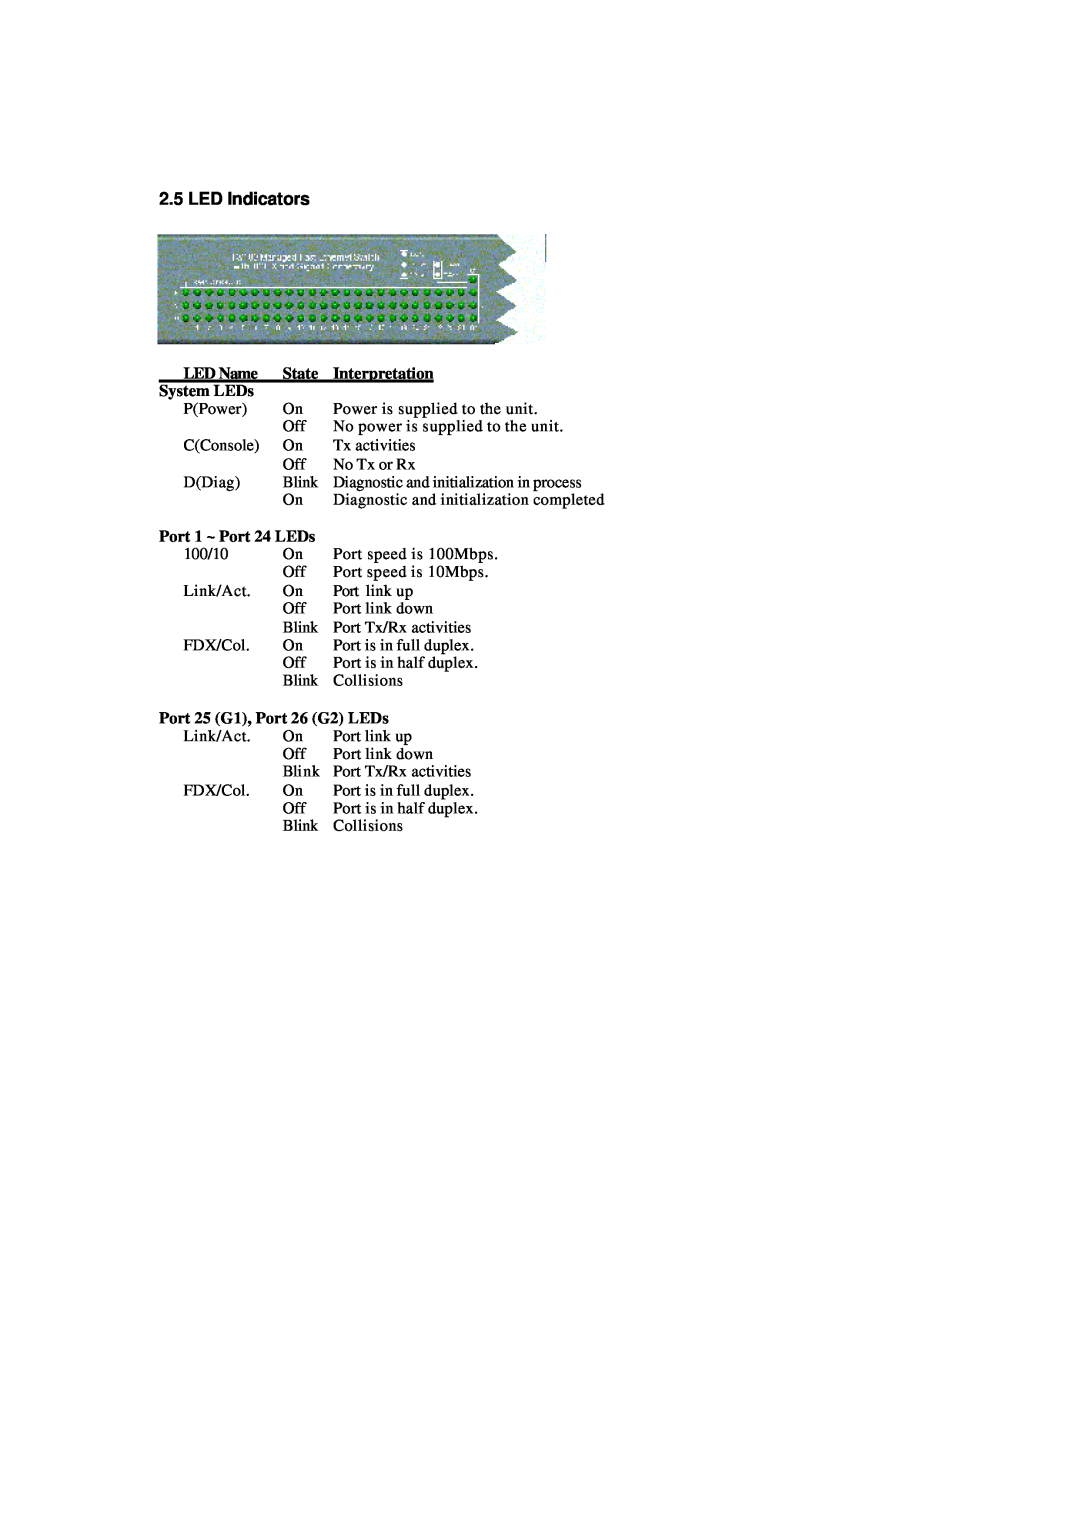 Xerox NS-2260 operation manual LED Indicators, LED Name, State, Interpretation, System LEDs, Port 1 ~ Port 24 LEDs 